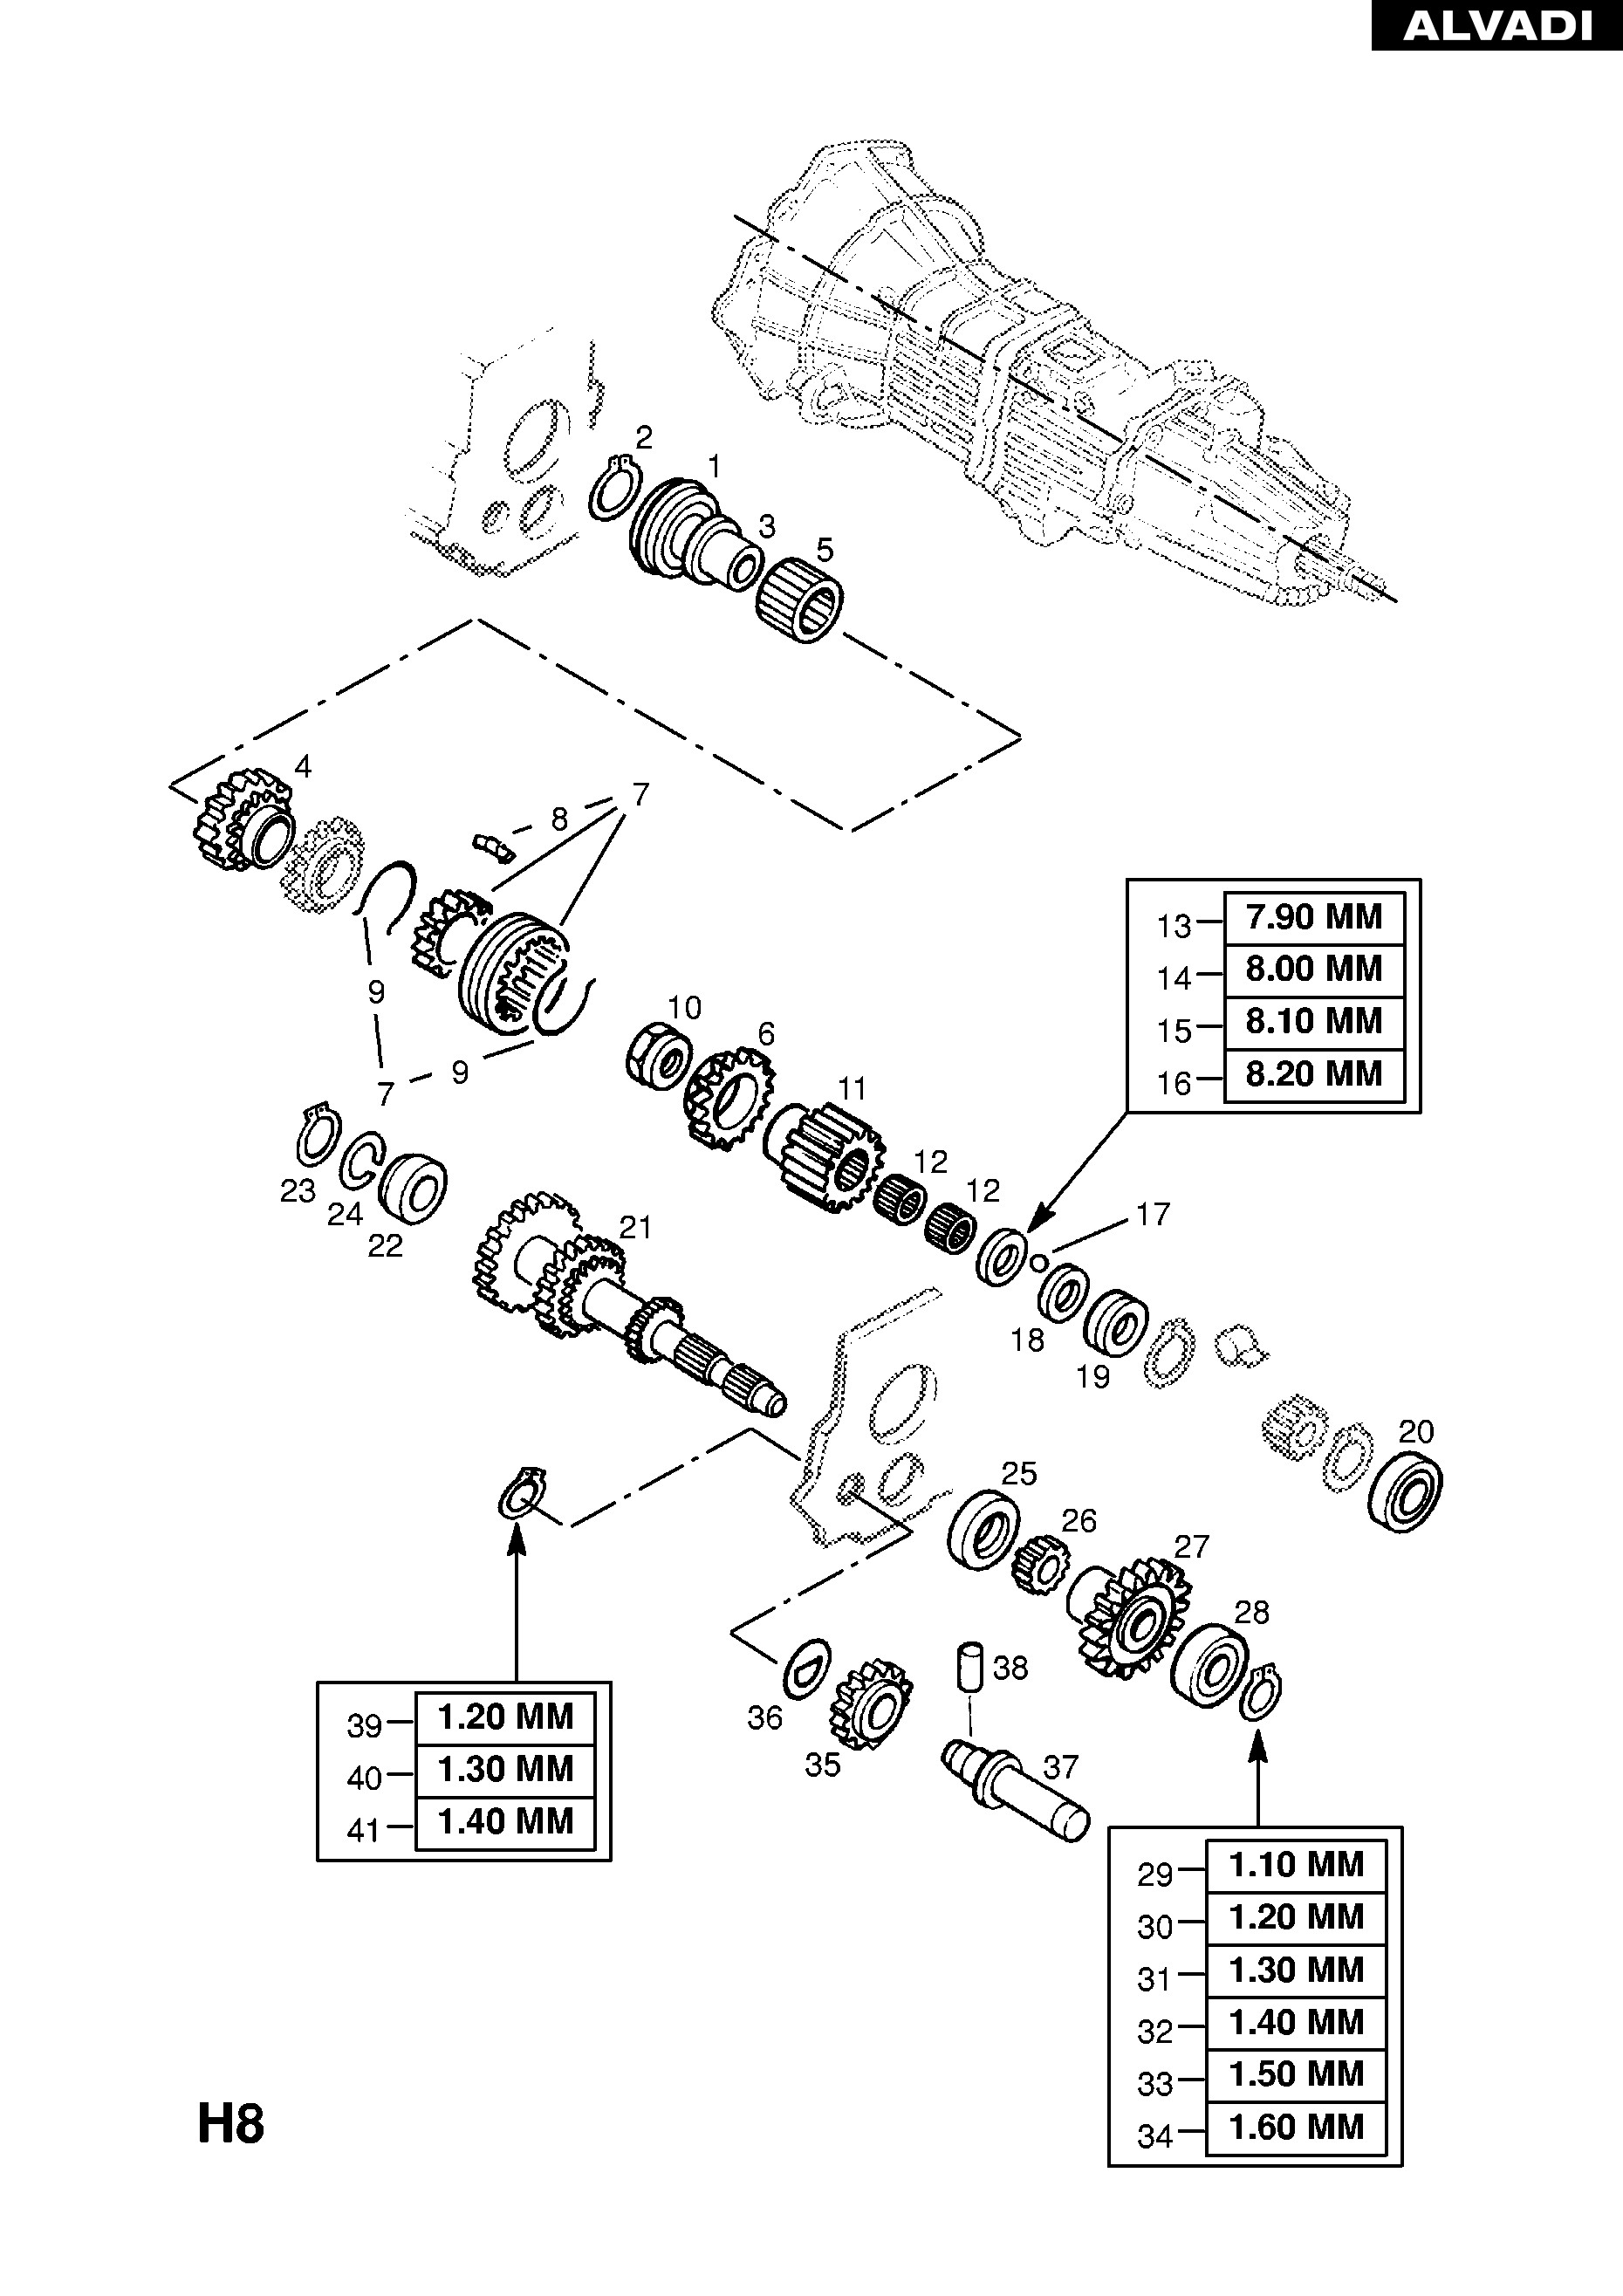 Manual Transmission Parts Diagram Opel Manual Transmission Countershaft and Gears Of Manual Transmission Parts Diagram